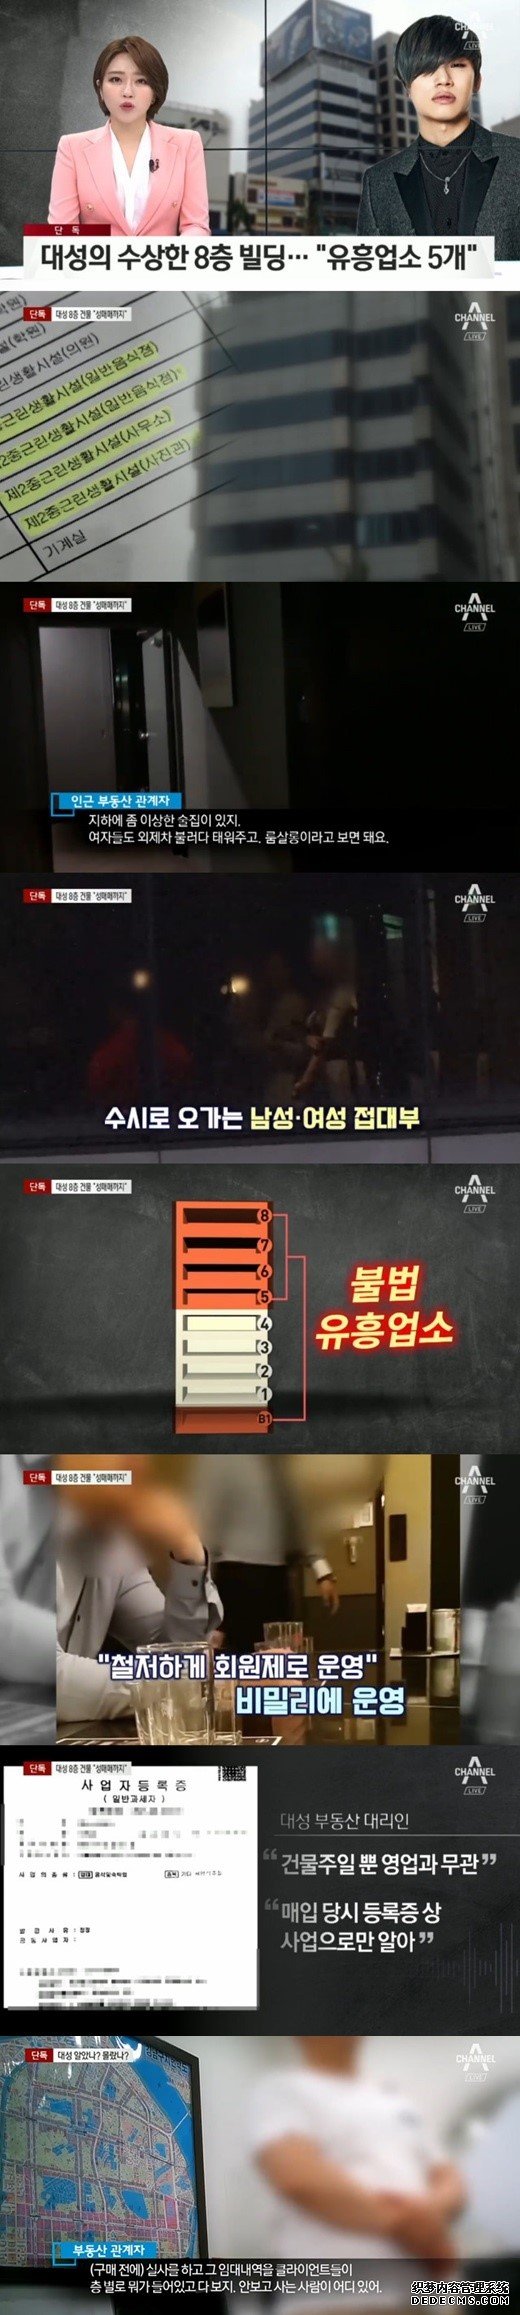 BIGBANG成员姜大声被爆料名下房产内有非法娱乐场所经营